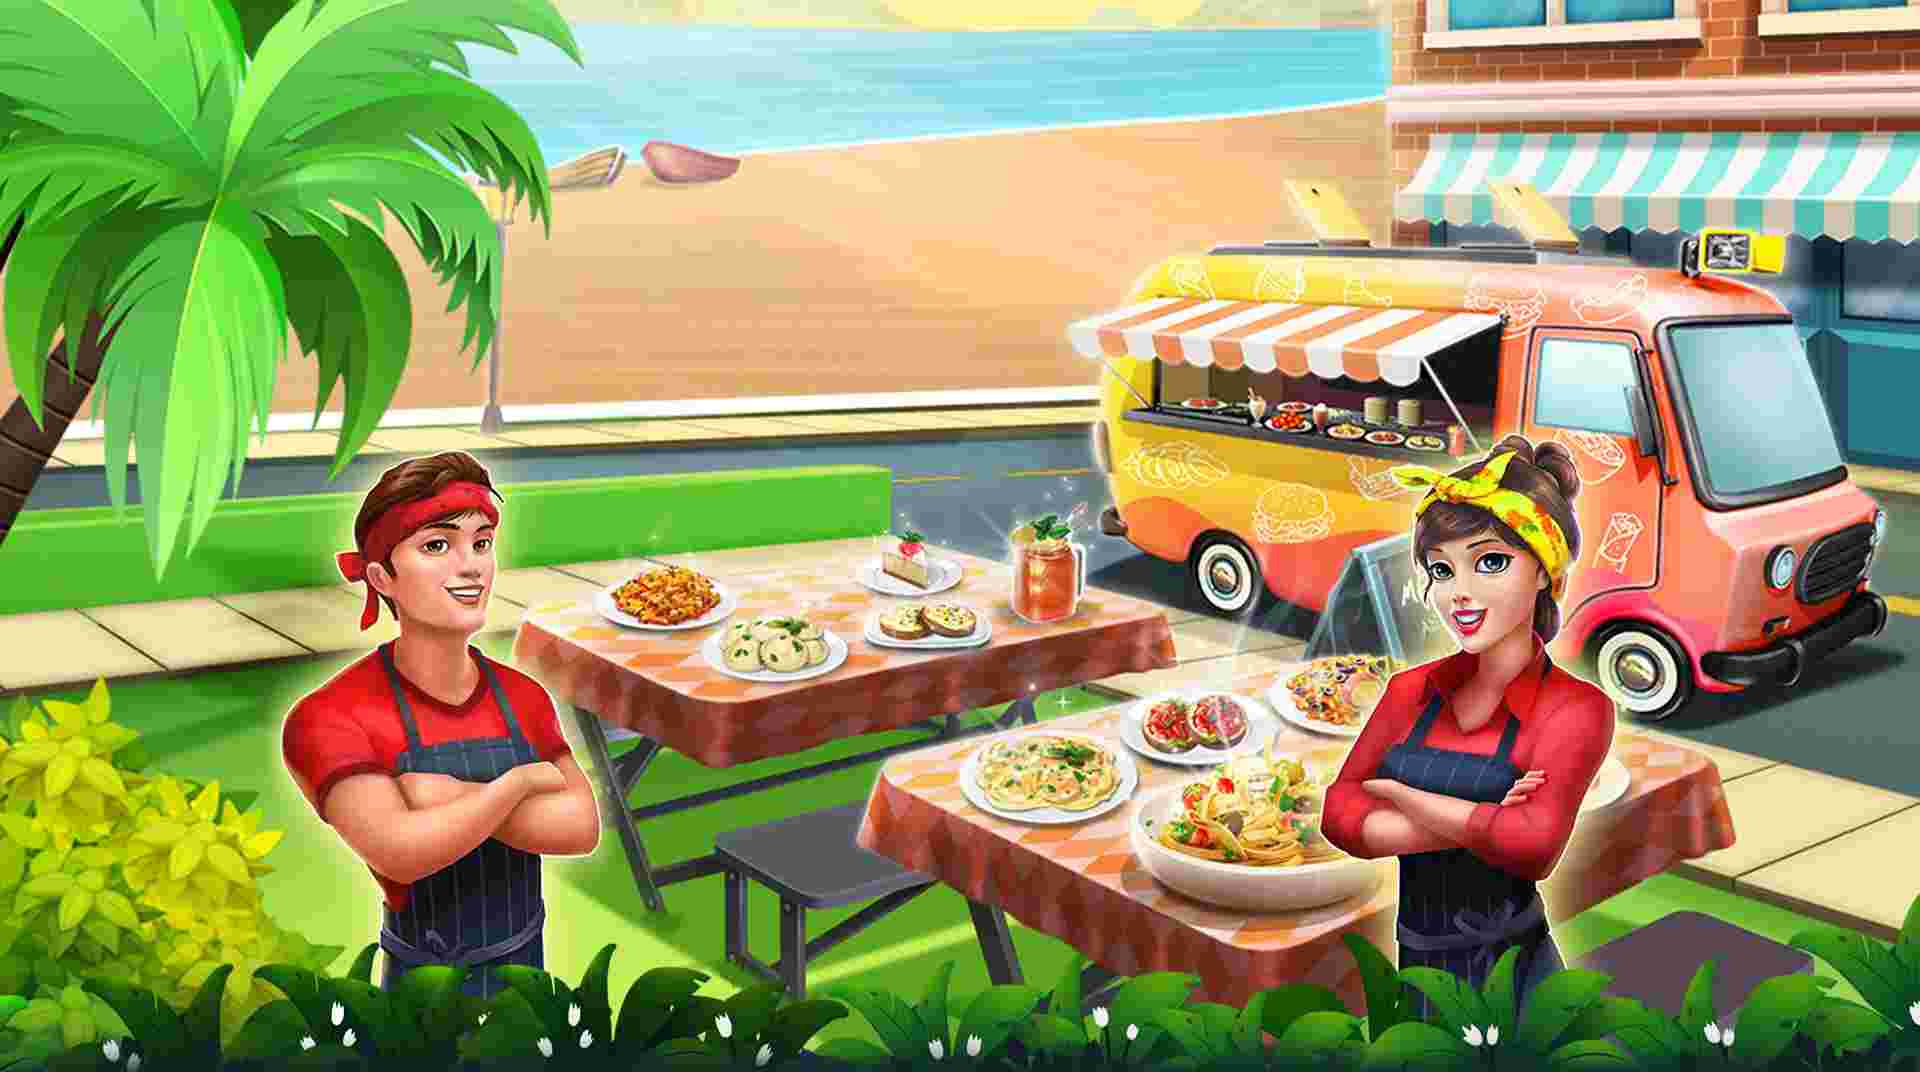 Food Truck Chef Mod